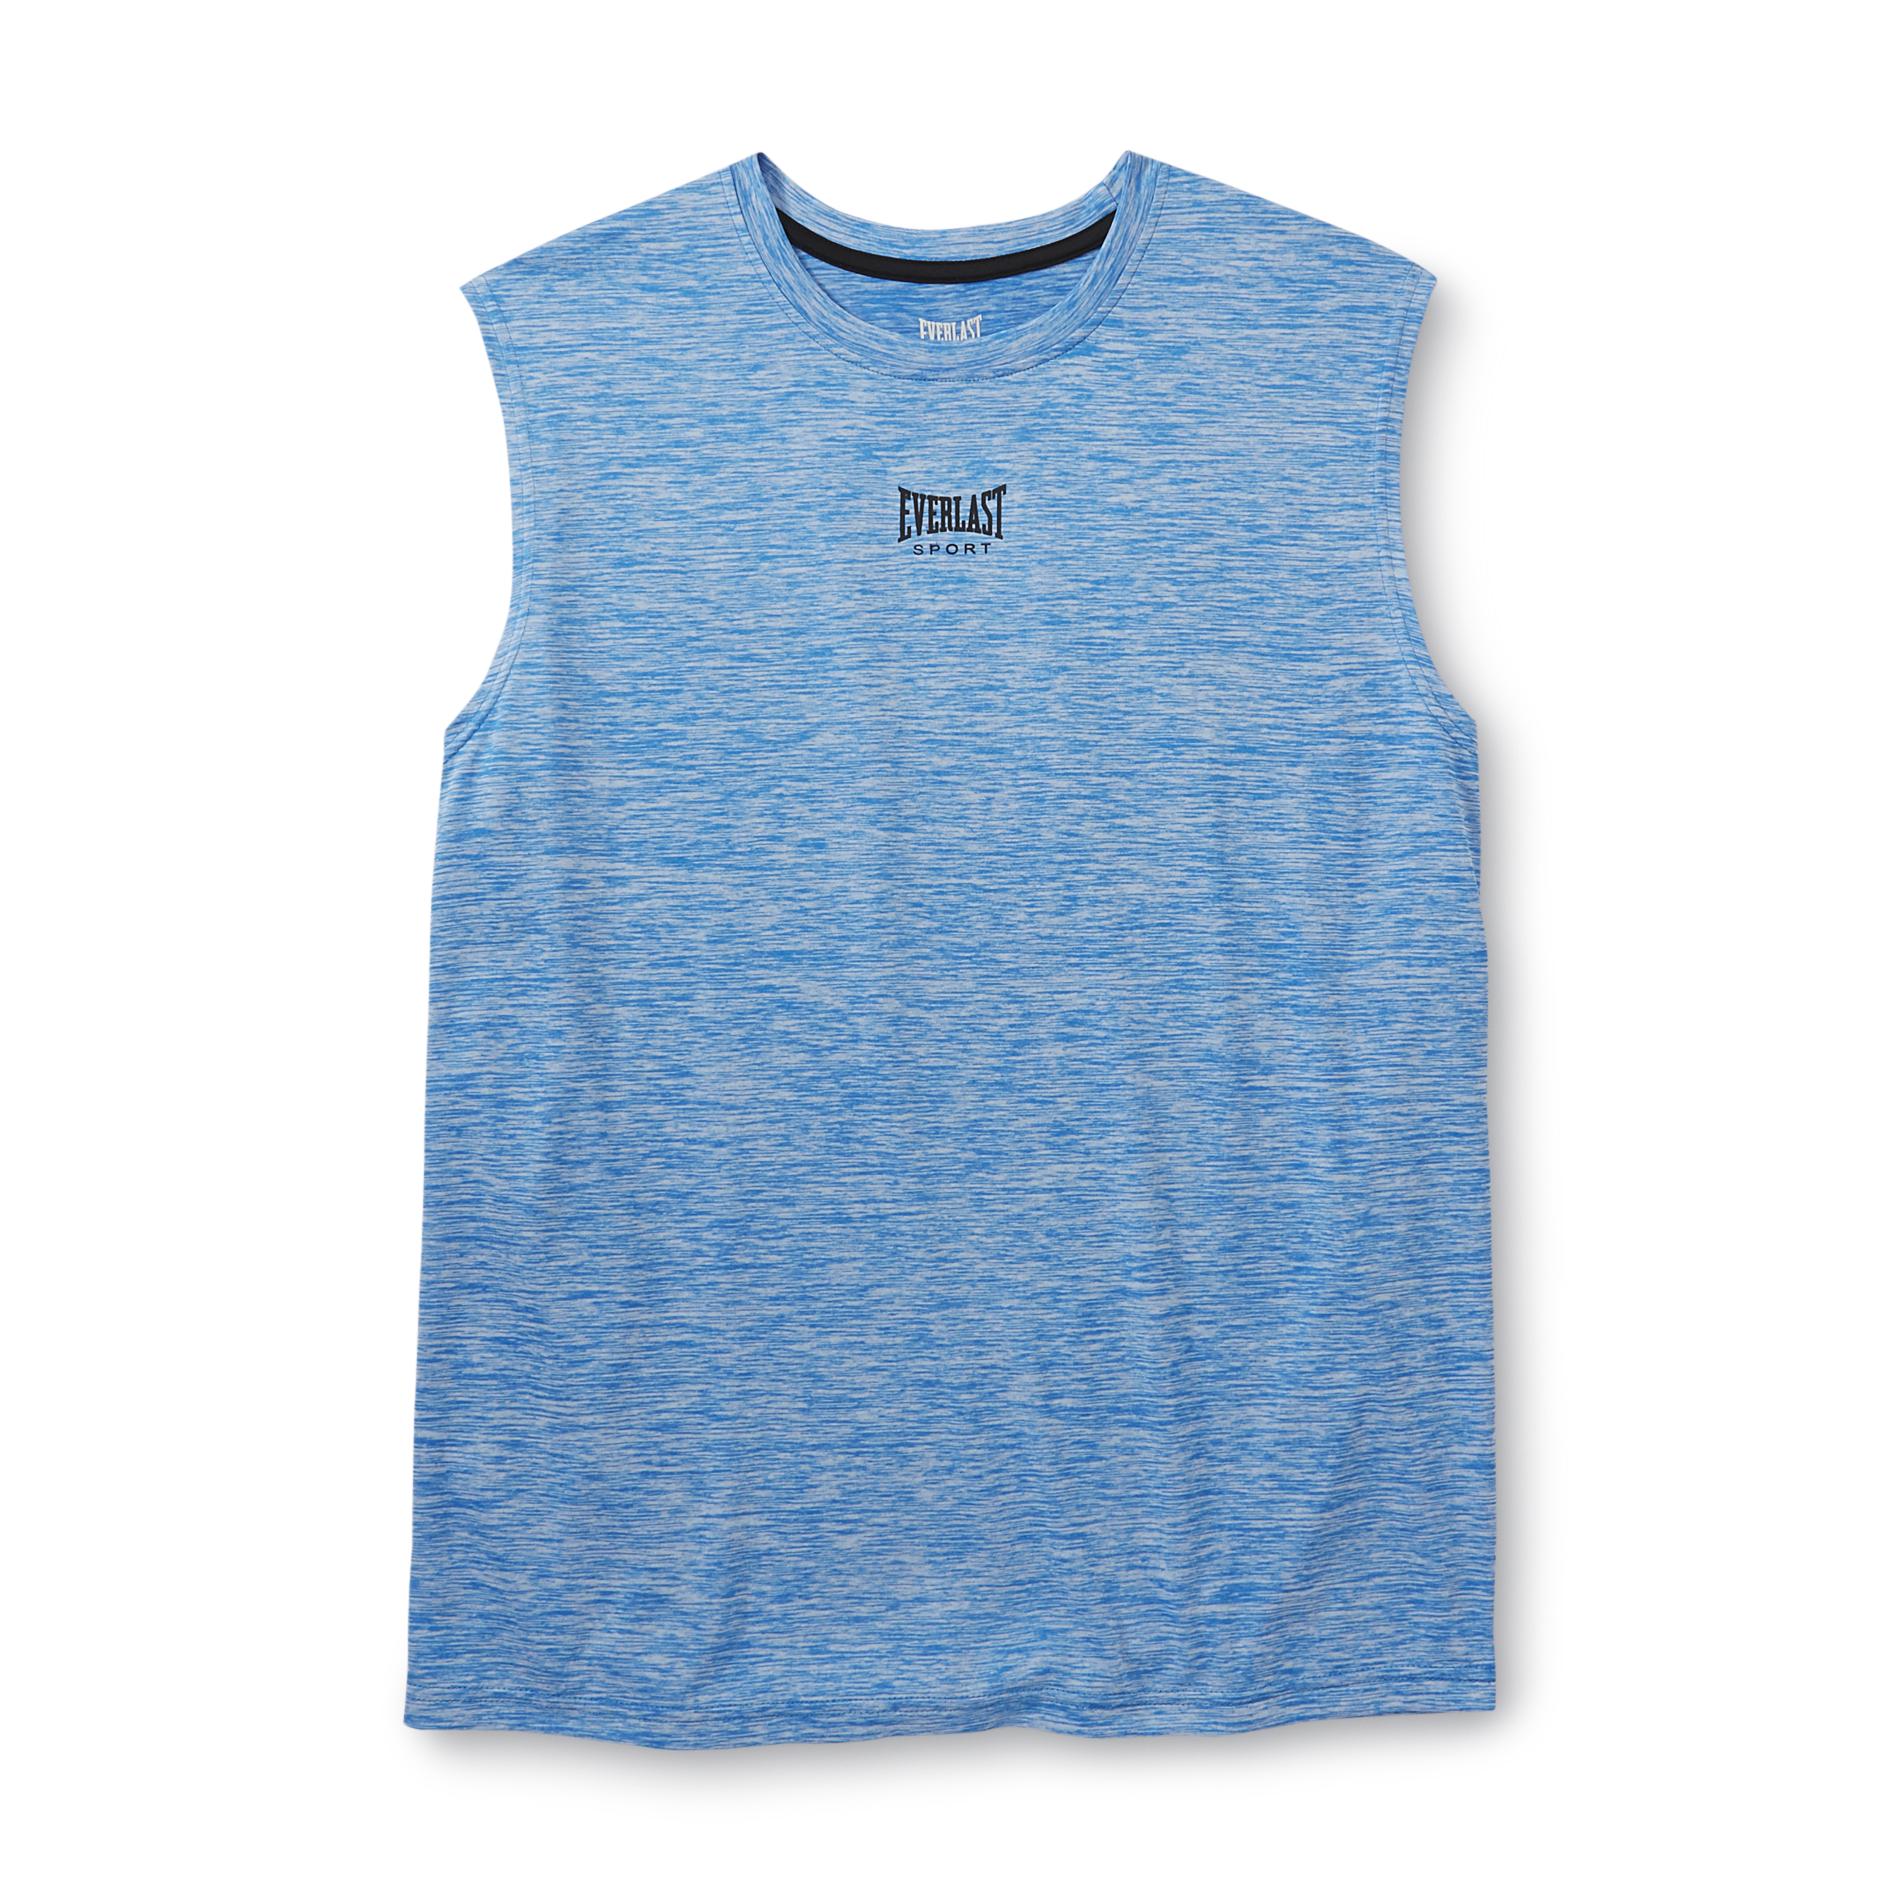 Everlast&reg; Sport Men's Muscle Shirt - Space-Dyed